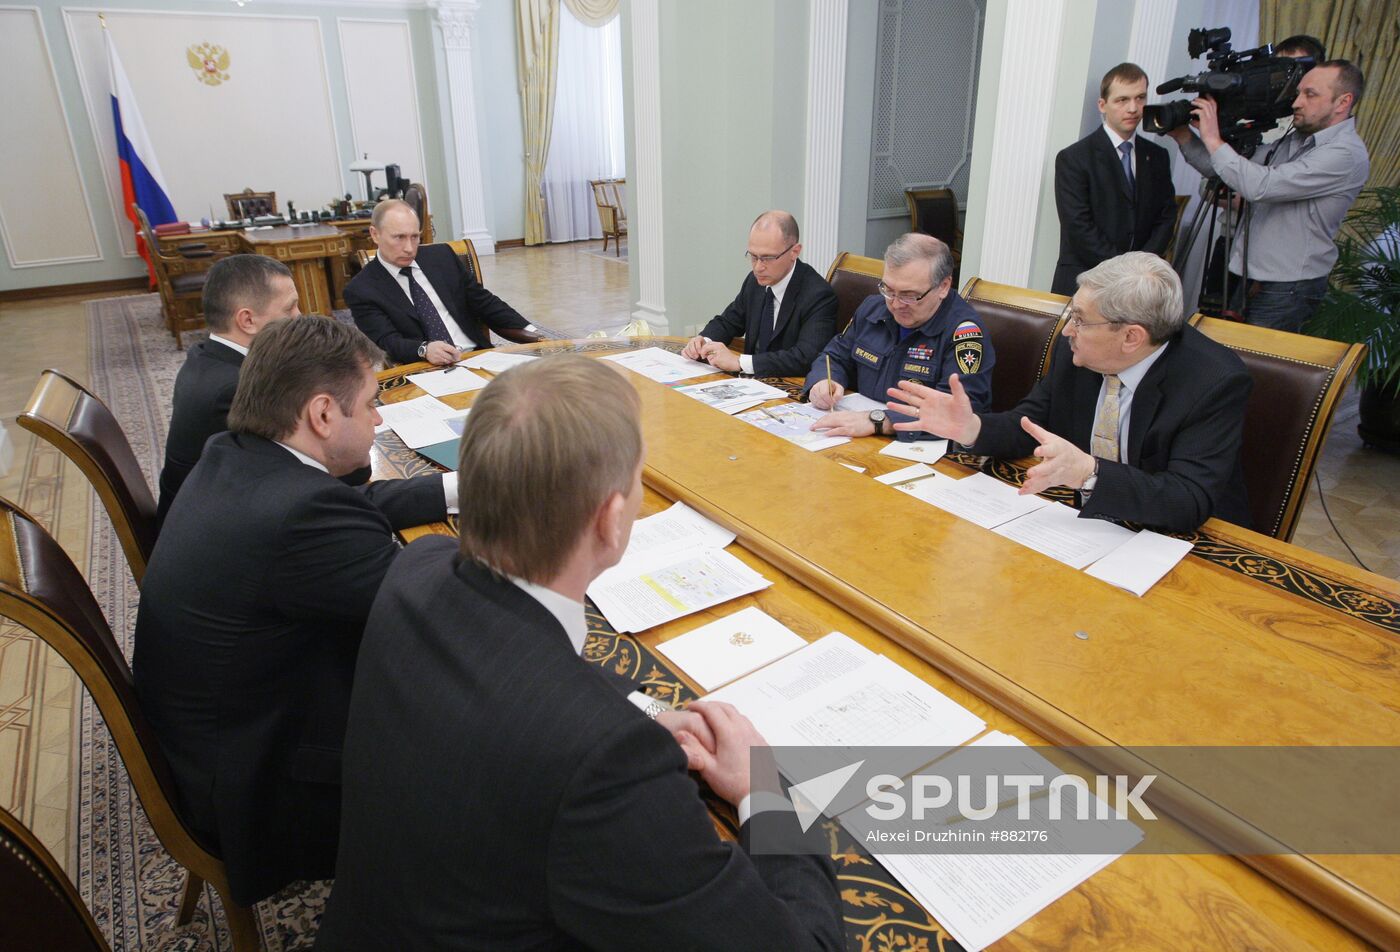 Vladimir Putin chairs a meeting in Novo-Ogaryovo